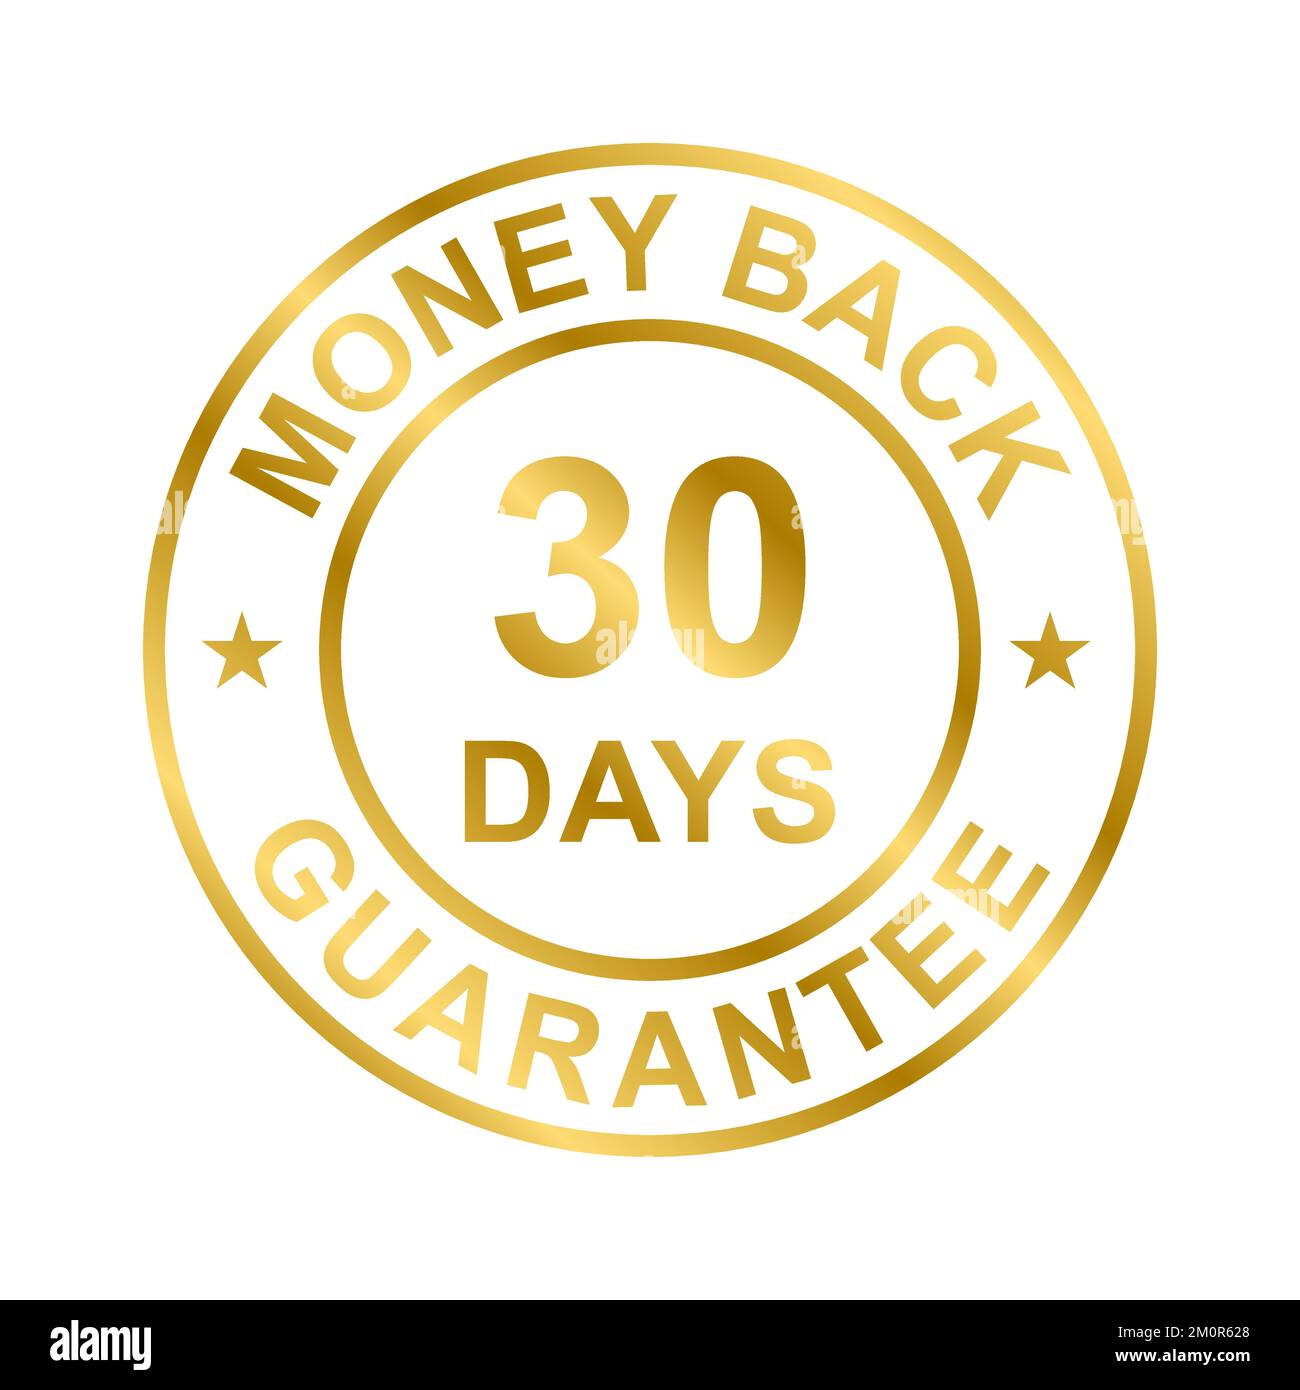 30 days money back guarantee icon vector for graphic design, logo ...